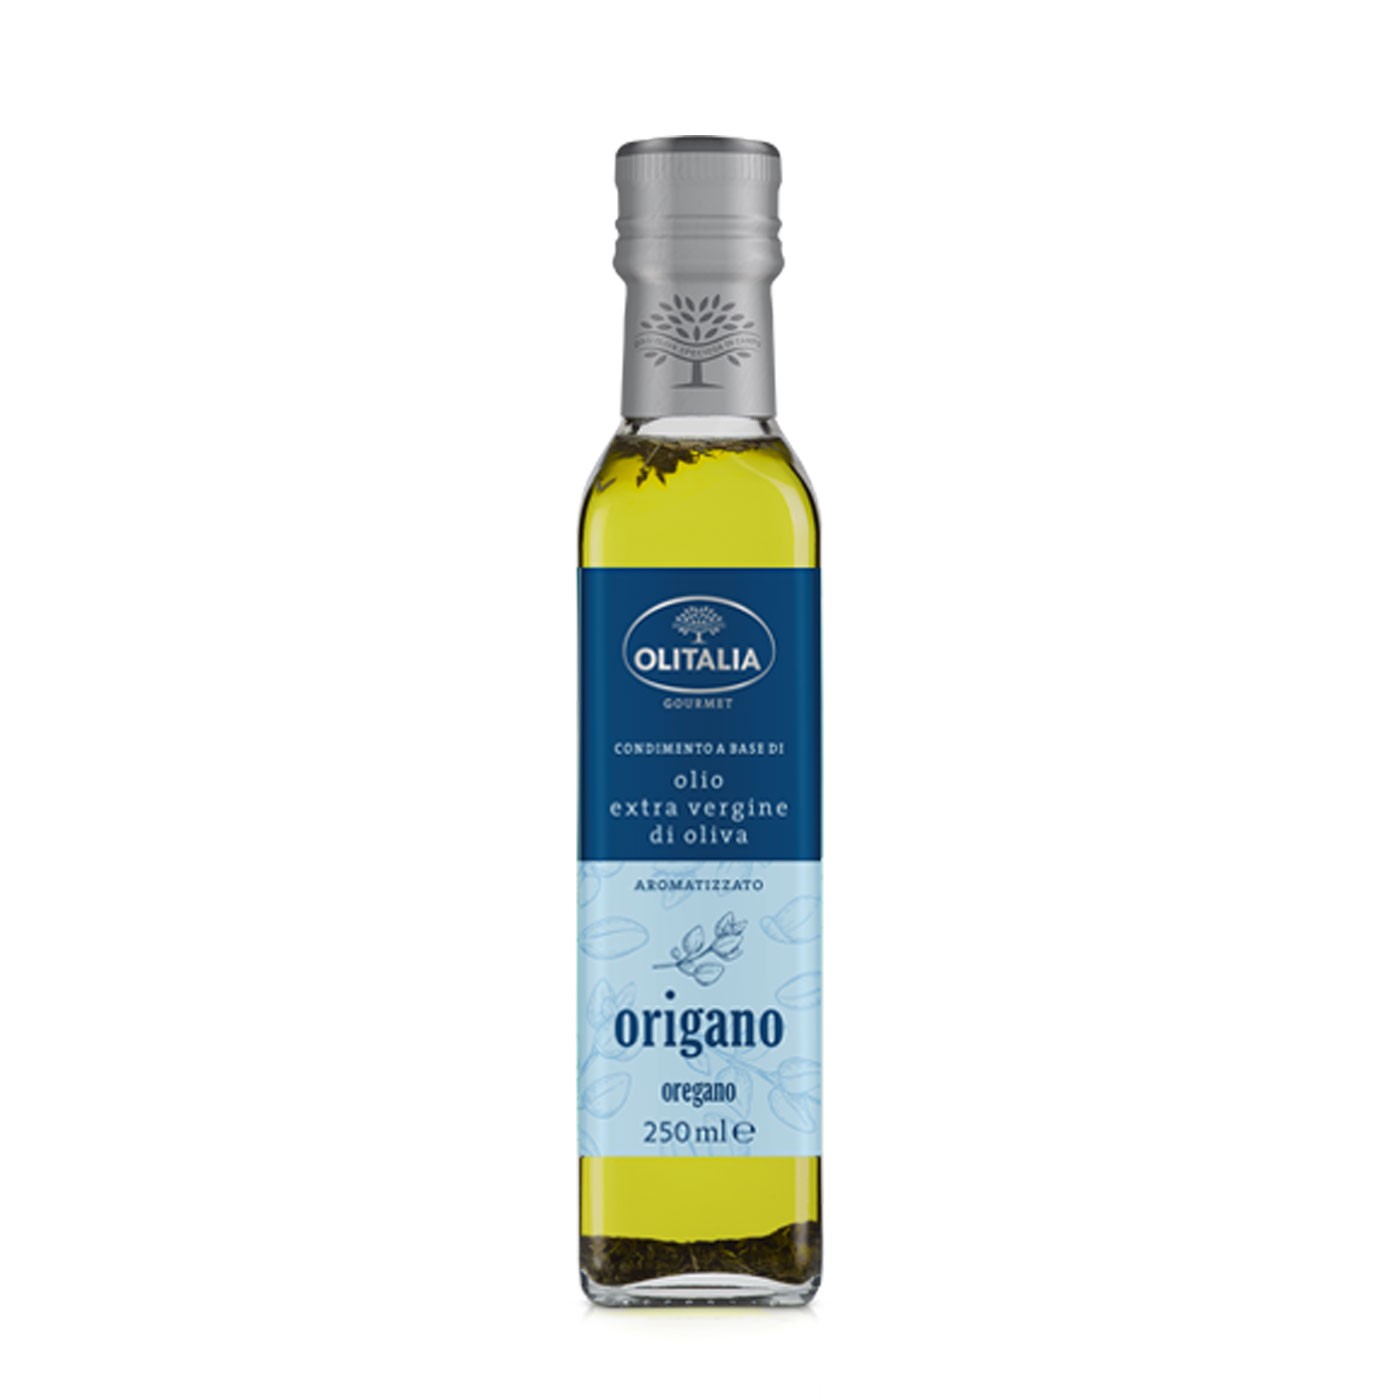 Oregano Infused Extra Virgin Olive Oil 8.4 oz